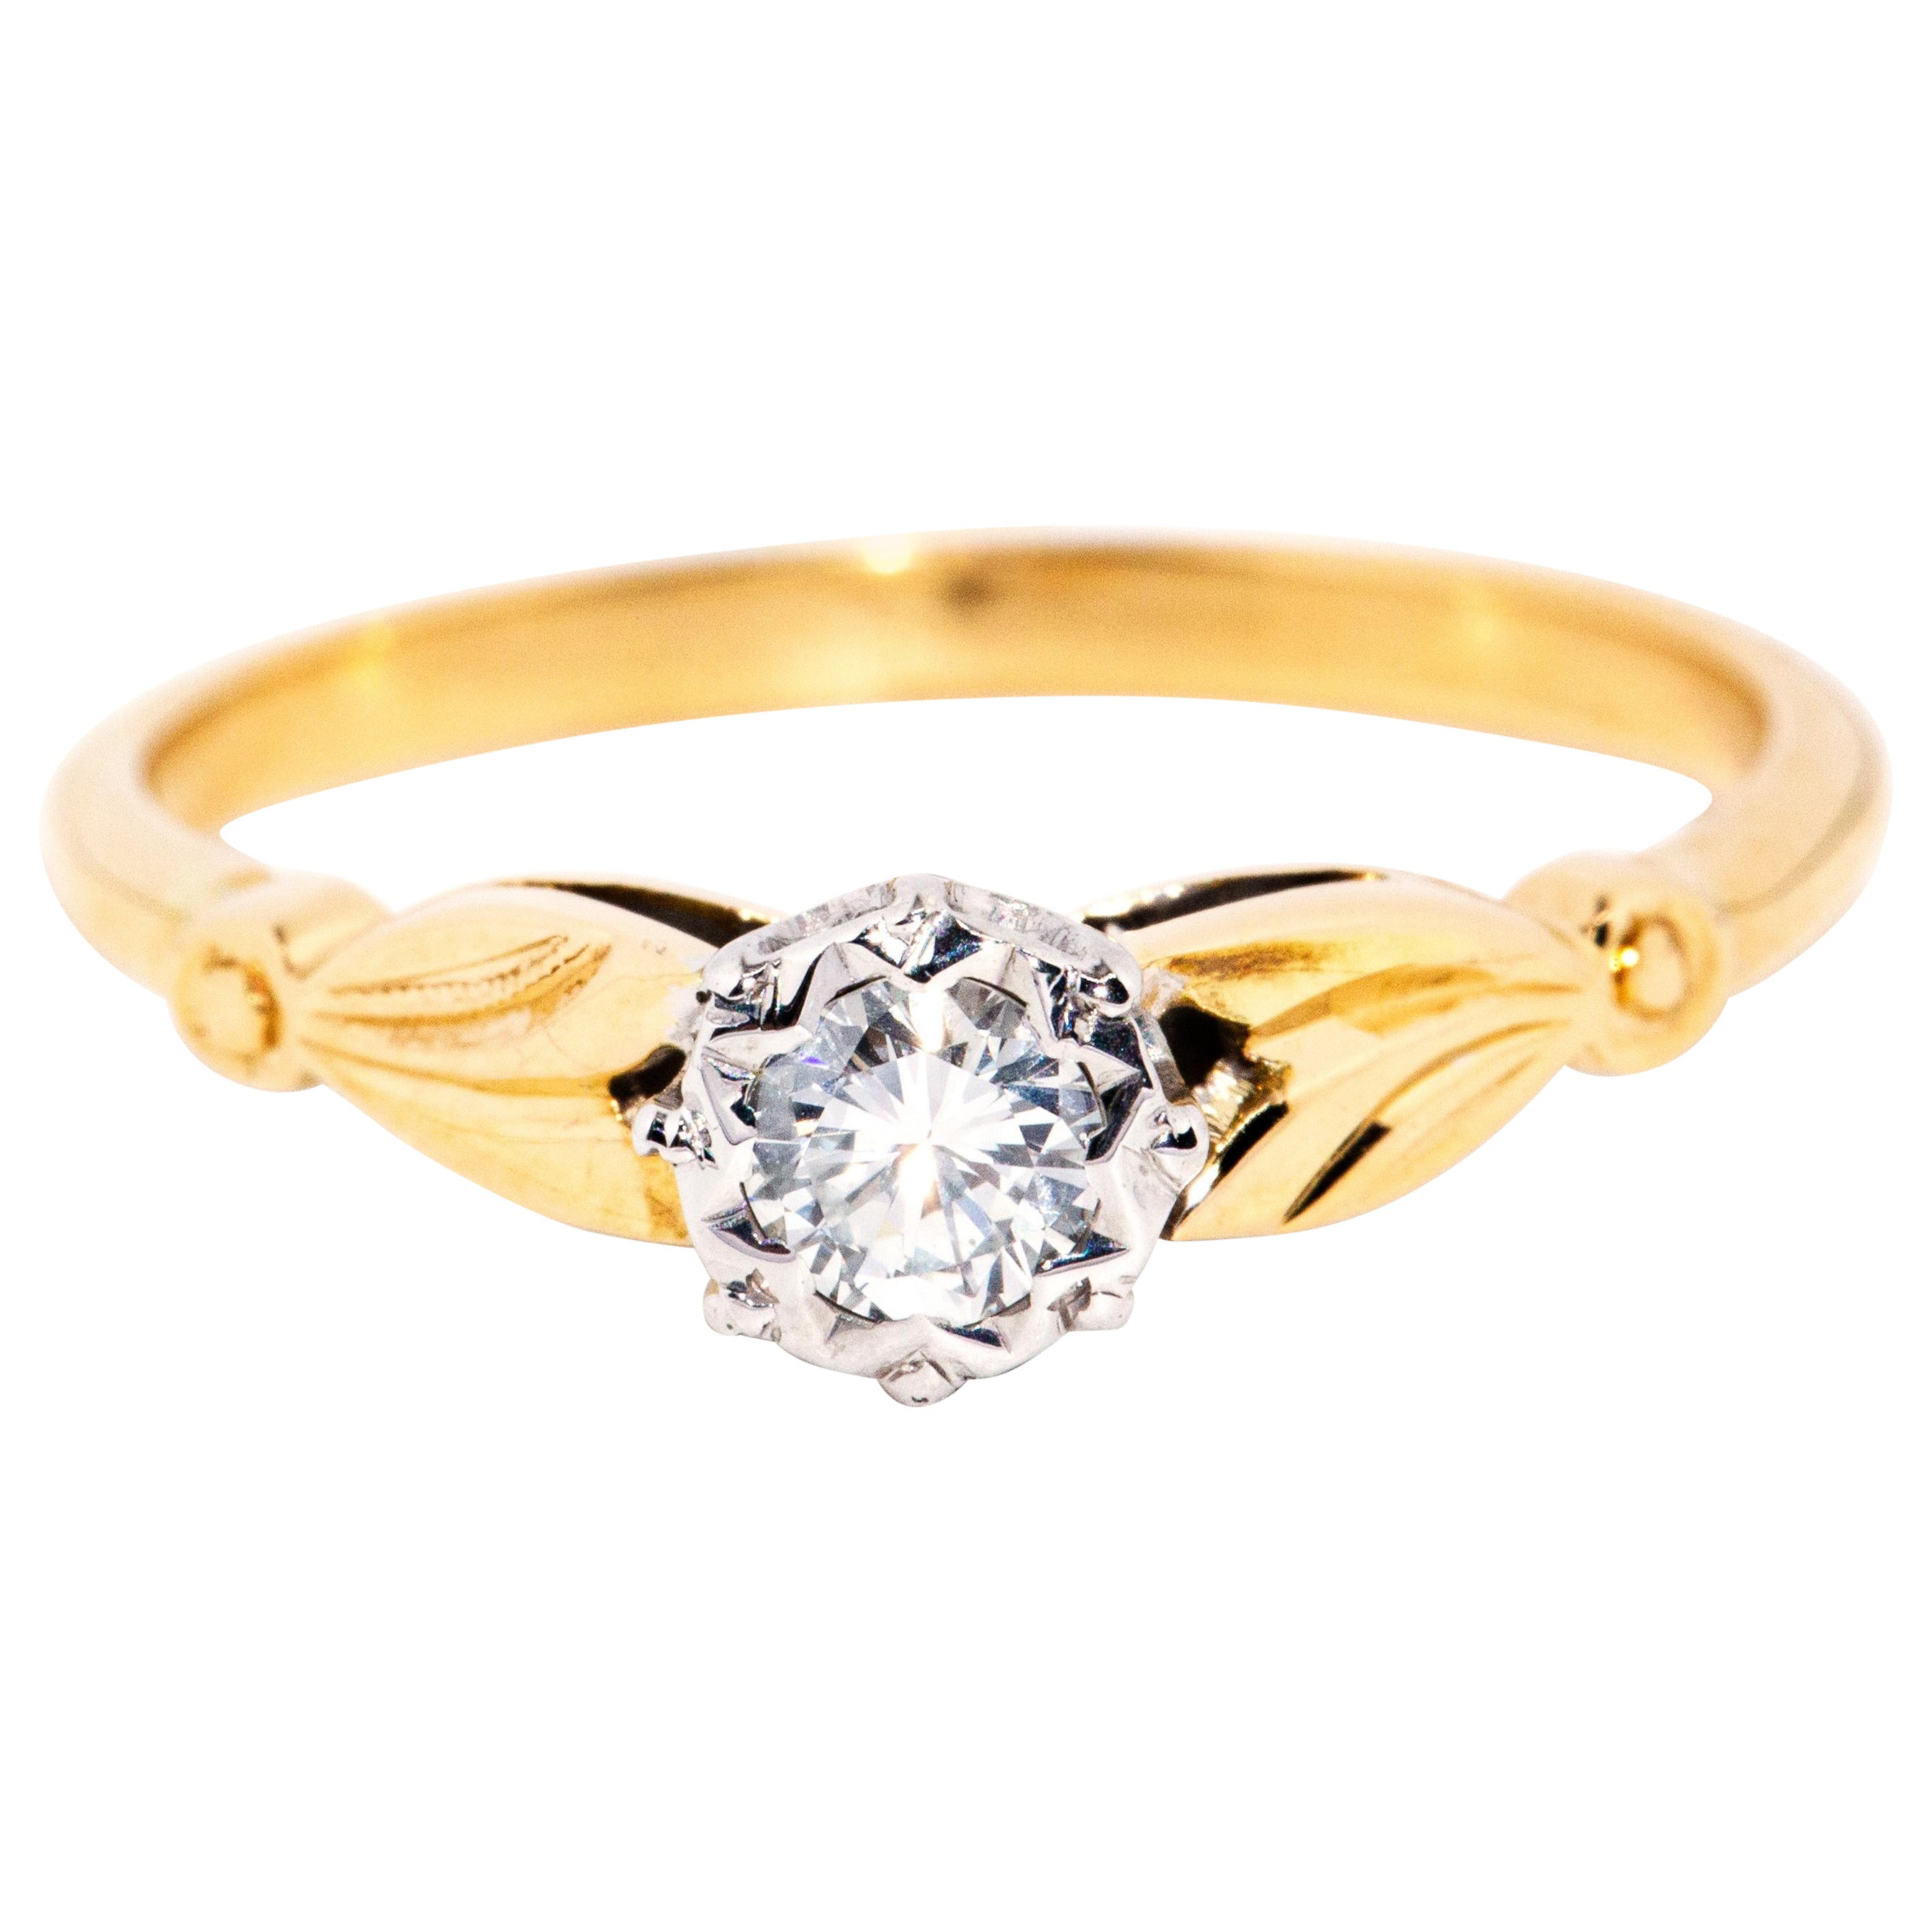 Vintage Circa 1960s Round Brilliant Diamond Solitaire Ring 18 Carat Yellow Gold